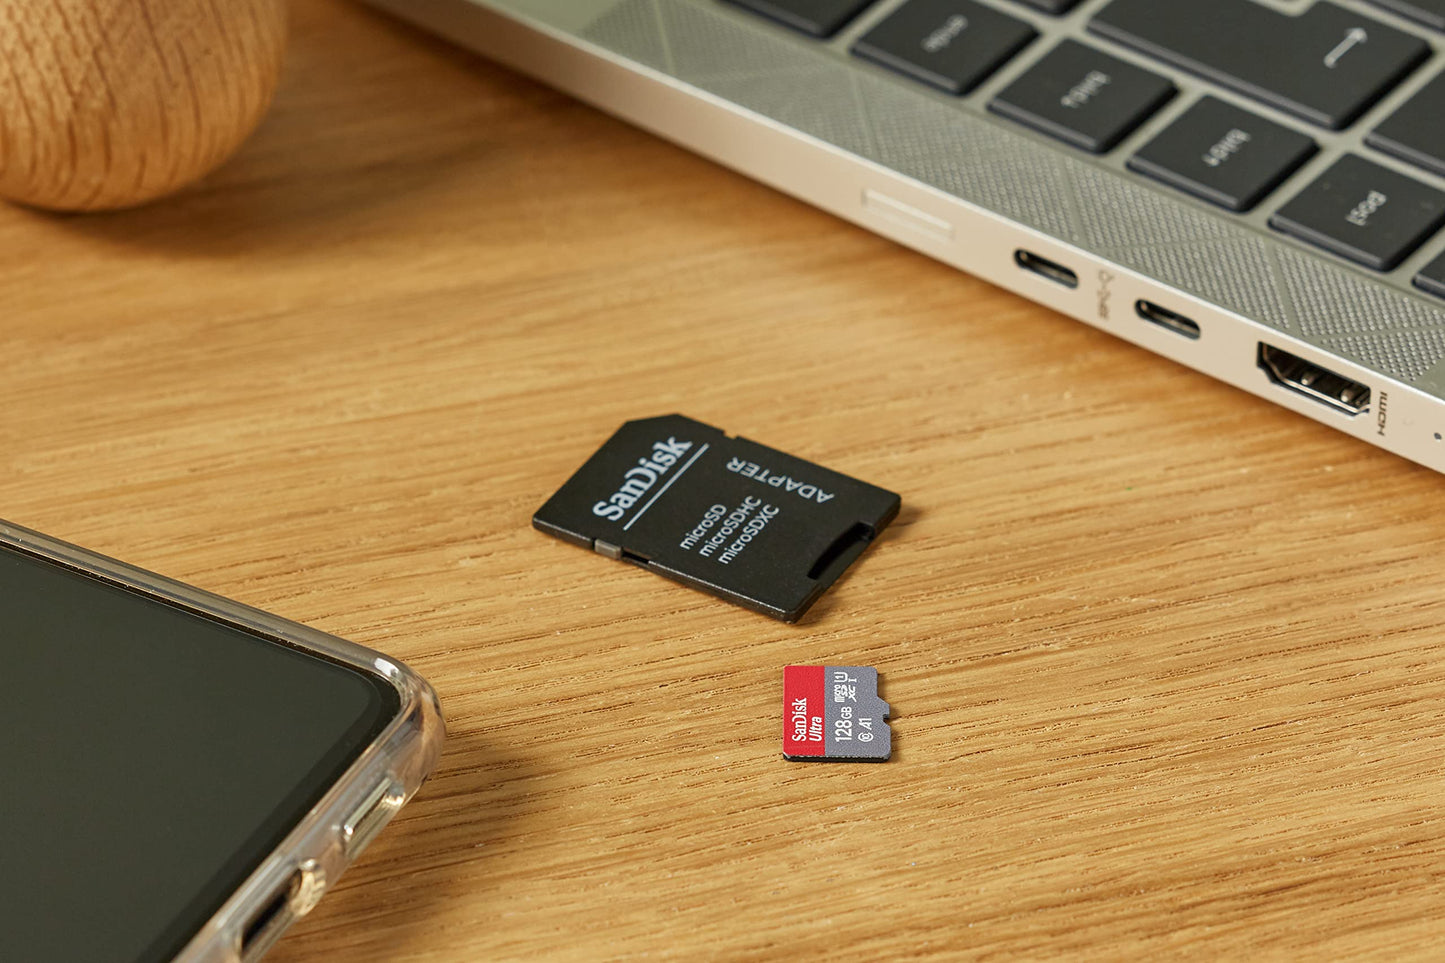 SanDisk 256GB Ultra microSDXC UHS-I Memory Card with Adapter - 120MB/s, C10, U1, Full HD, A1, Micro SD Card - SDSQUA4-256G-GN6MA